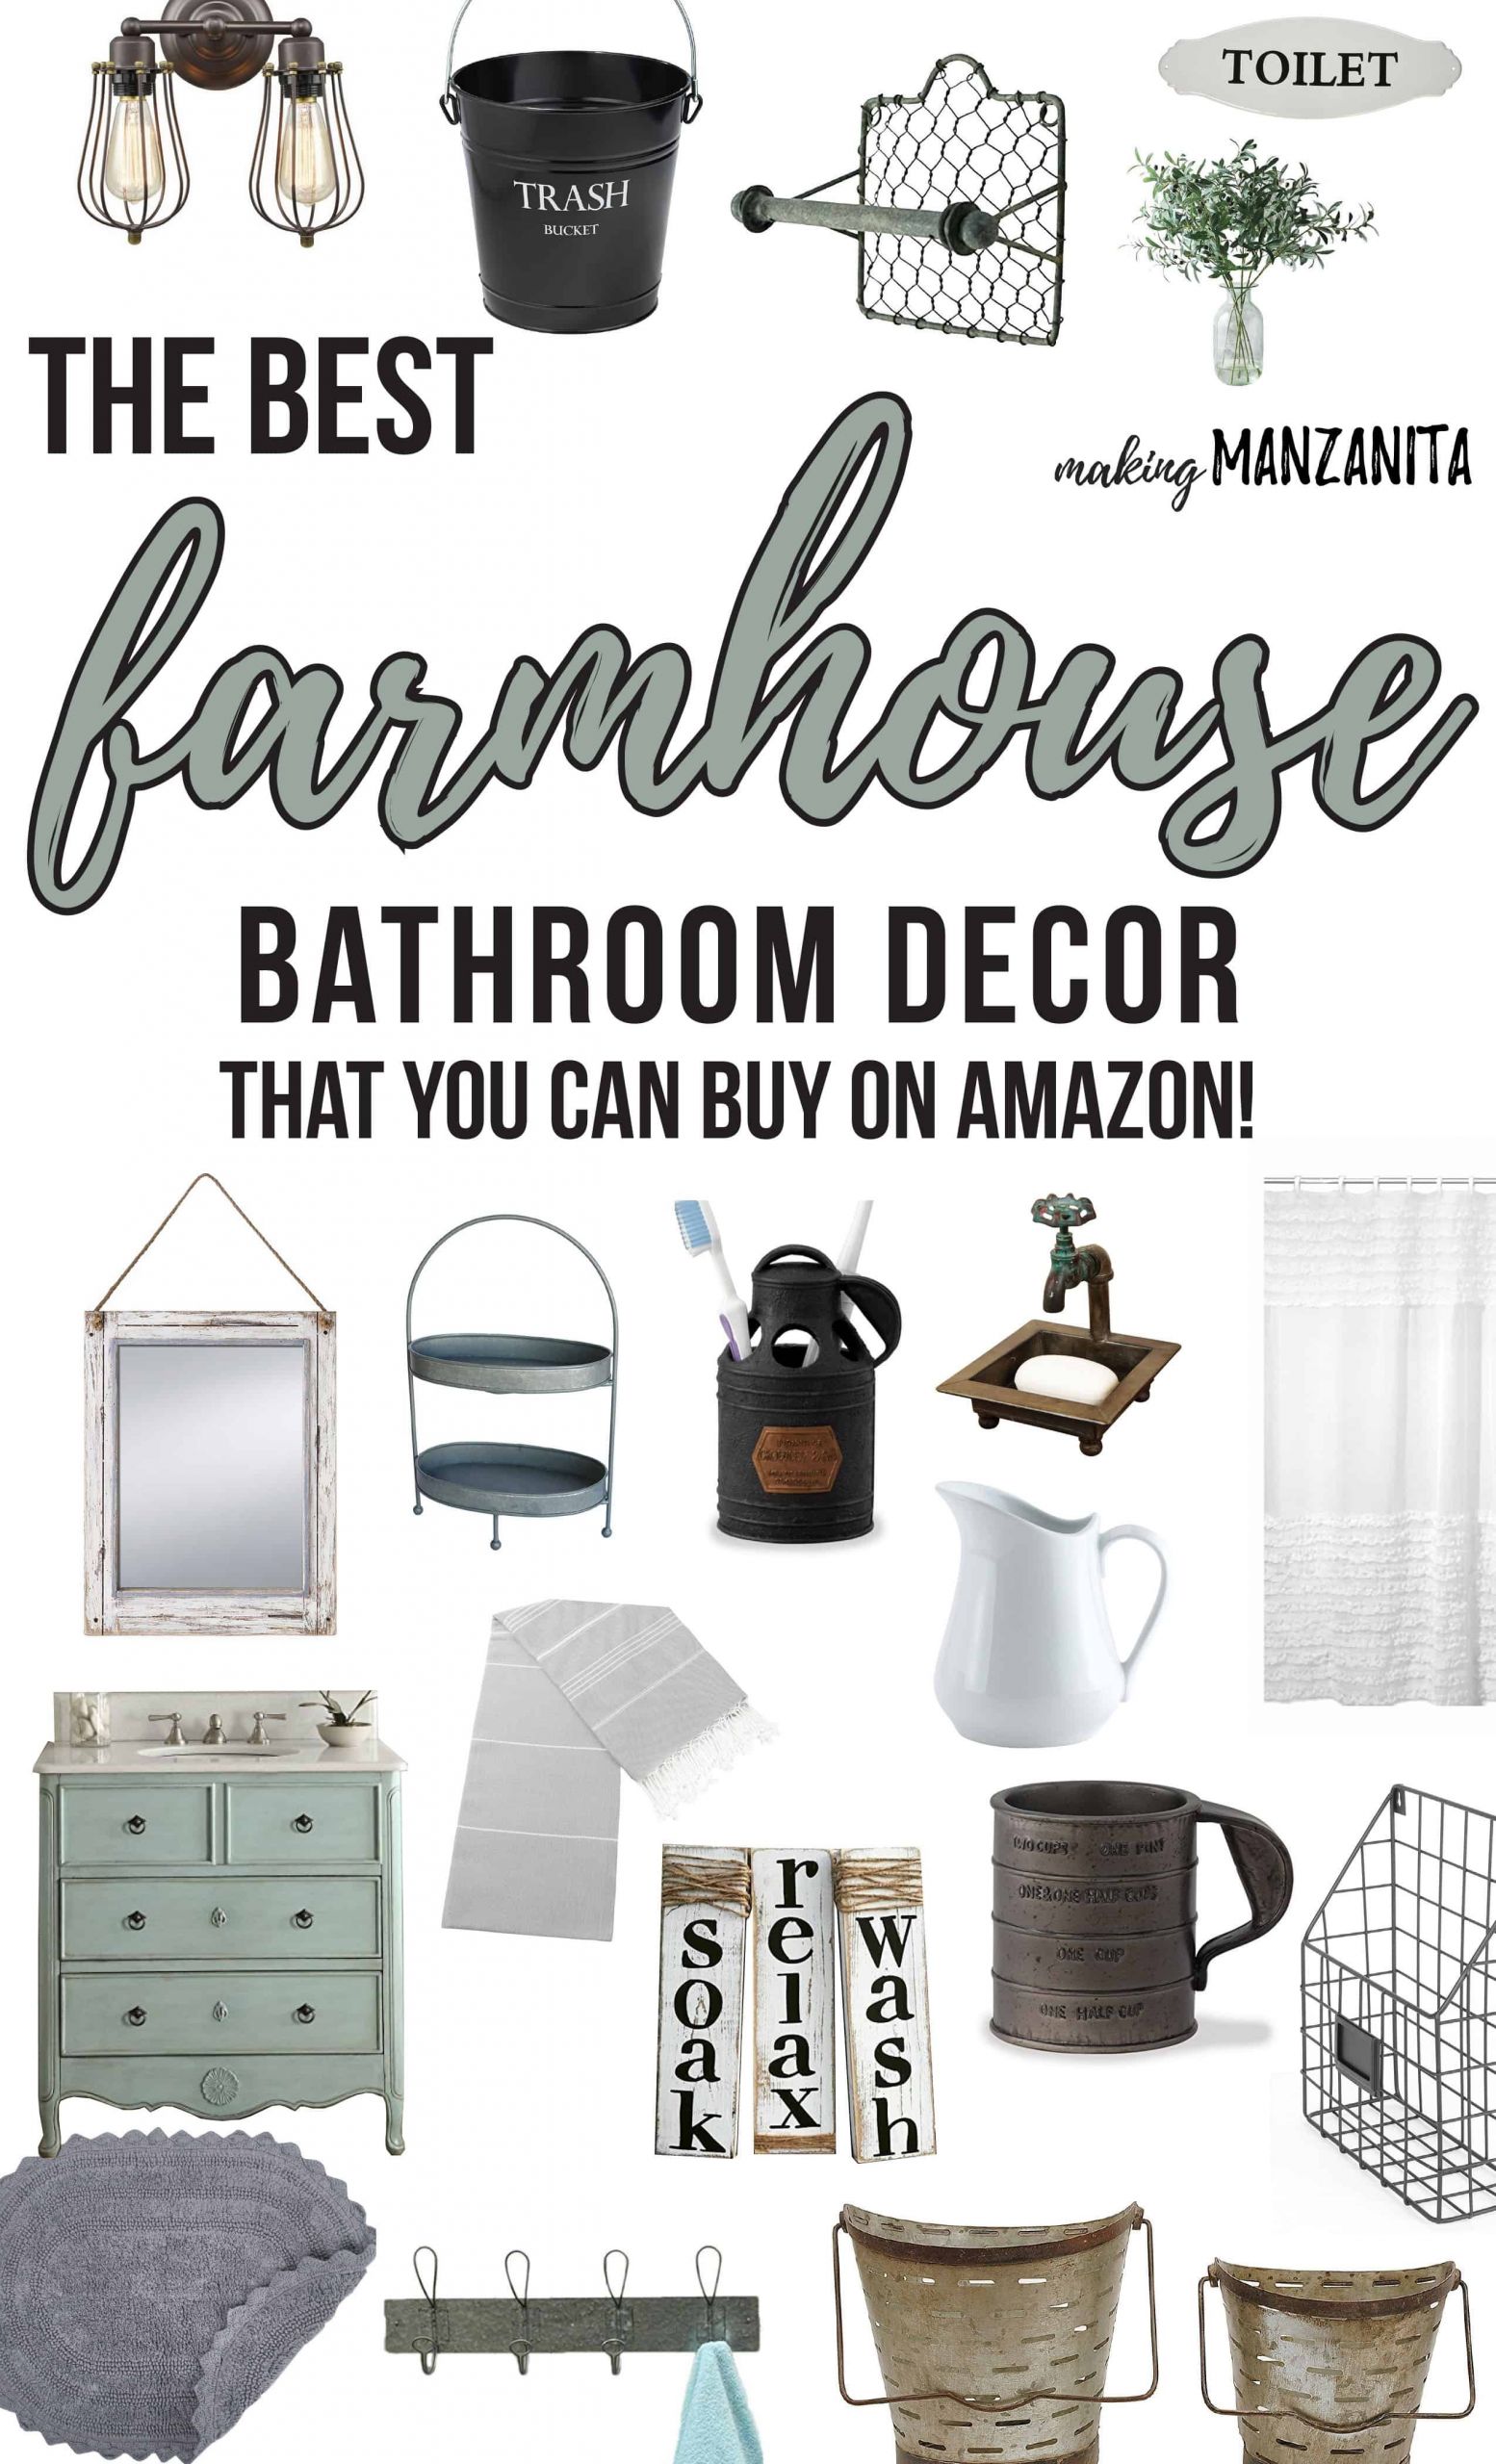 Amazon Bathroom Decor
 Best Farmhouse Bathroom Decor From Amazon Making Manzanita